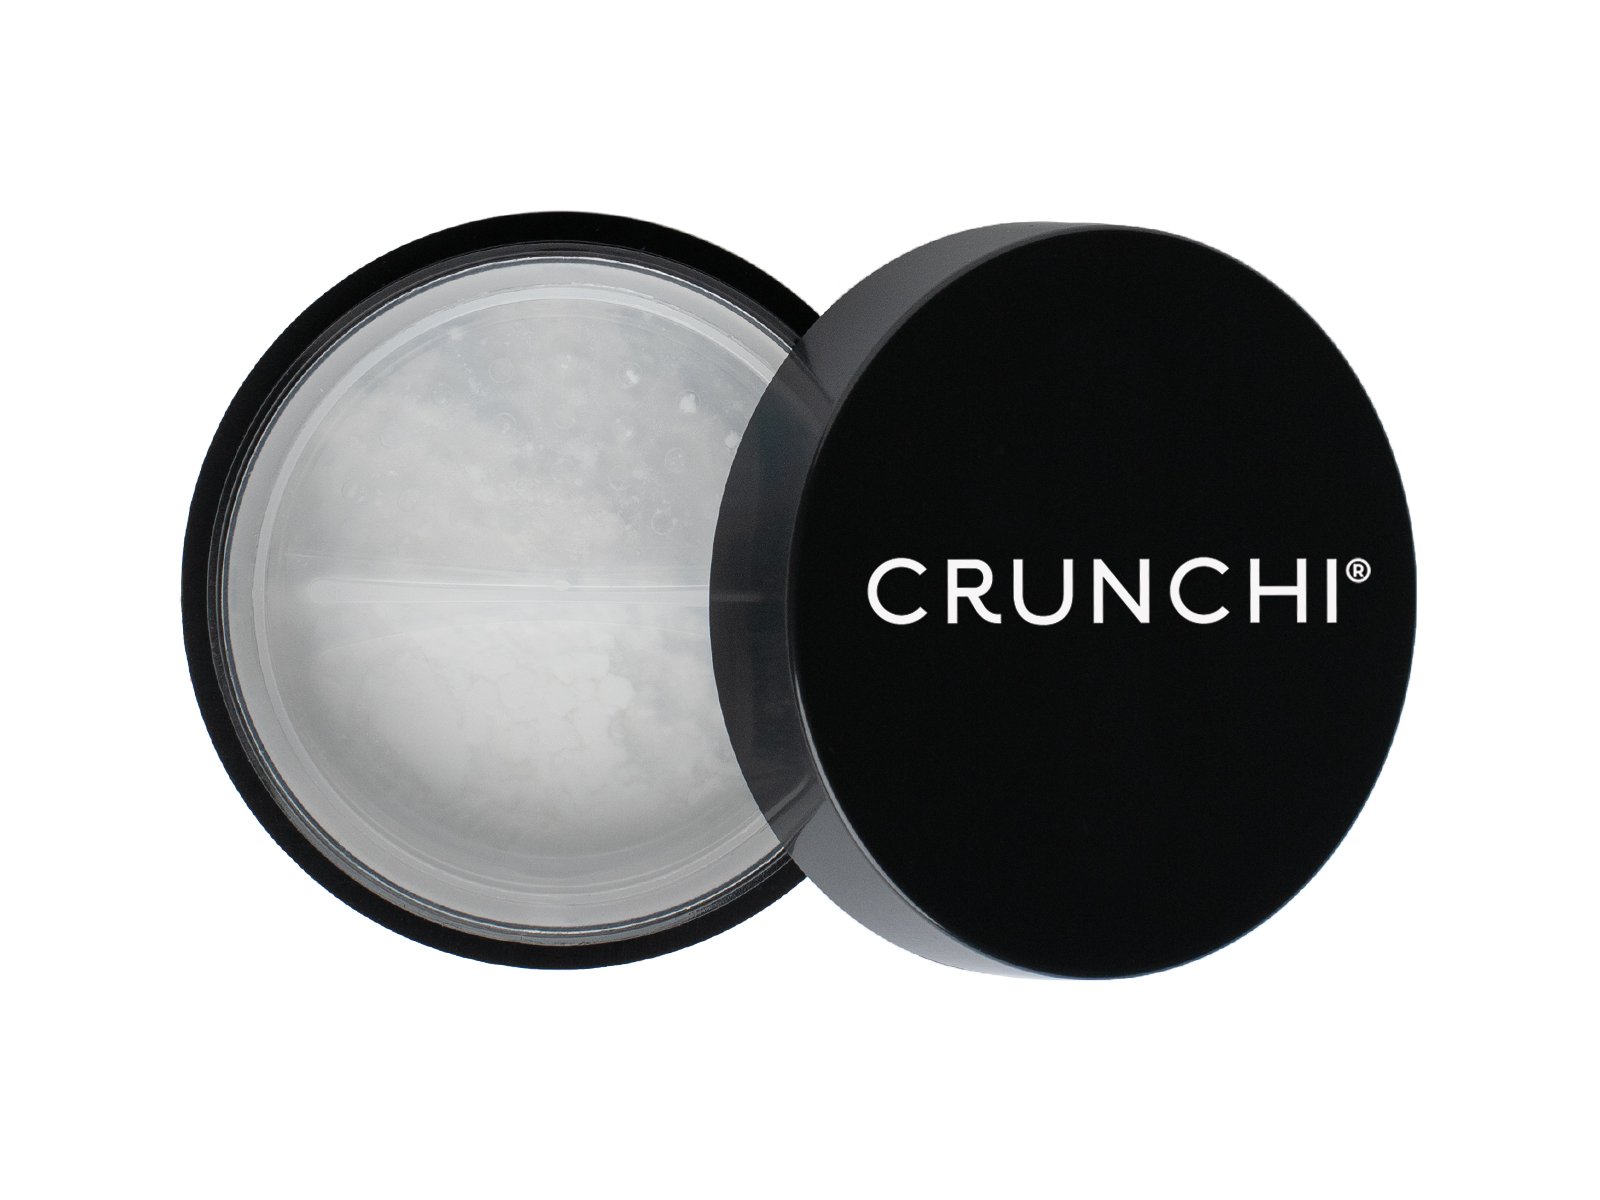 Crunchi Translucent Finishing Powder